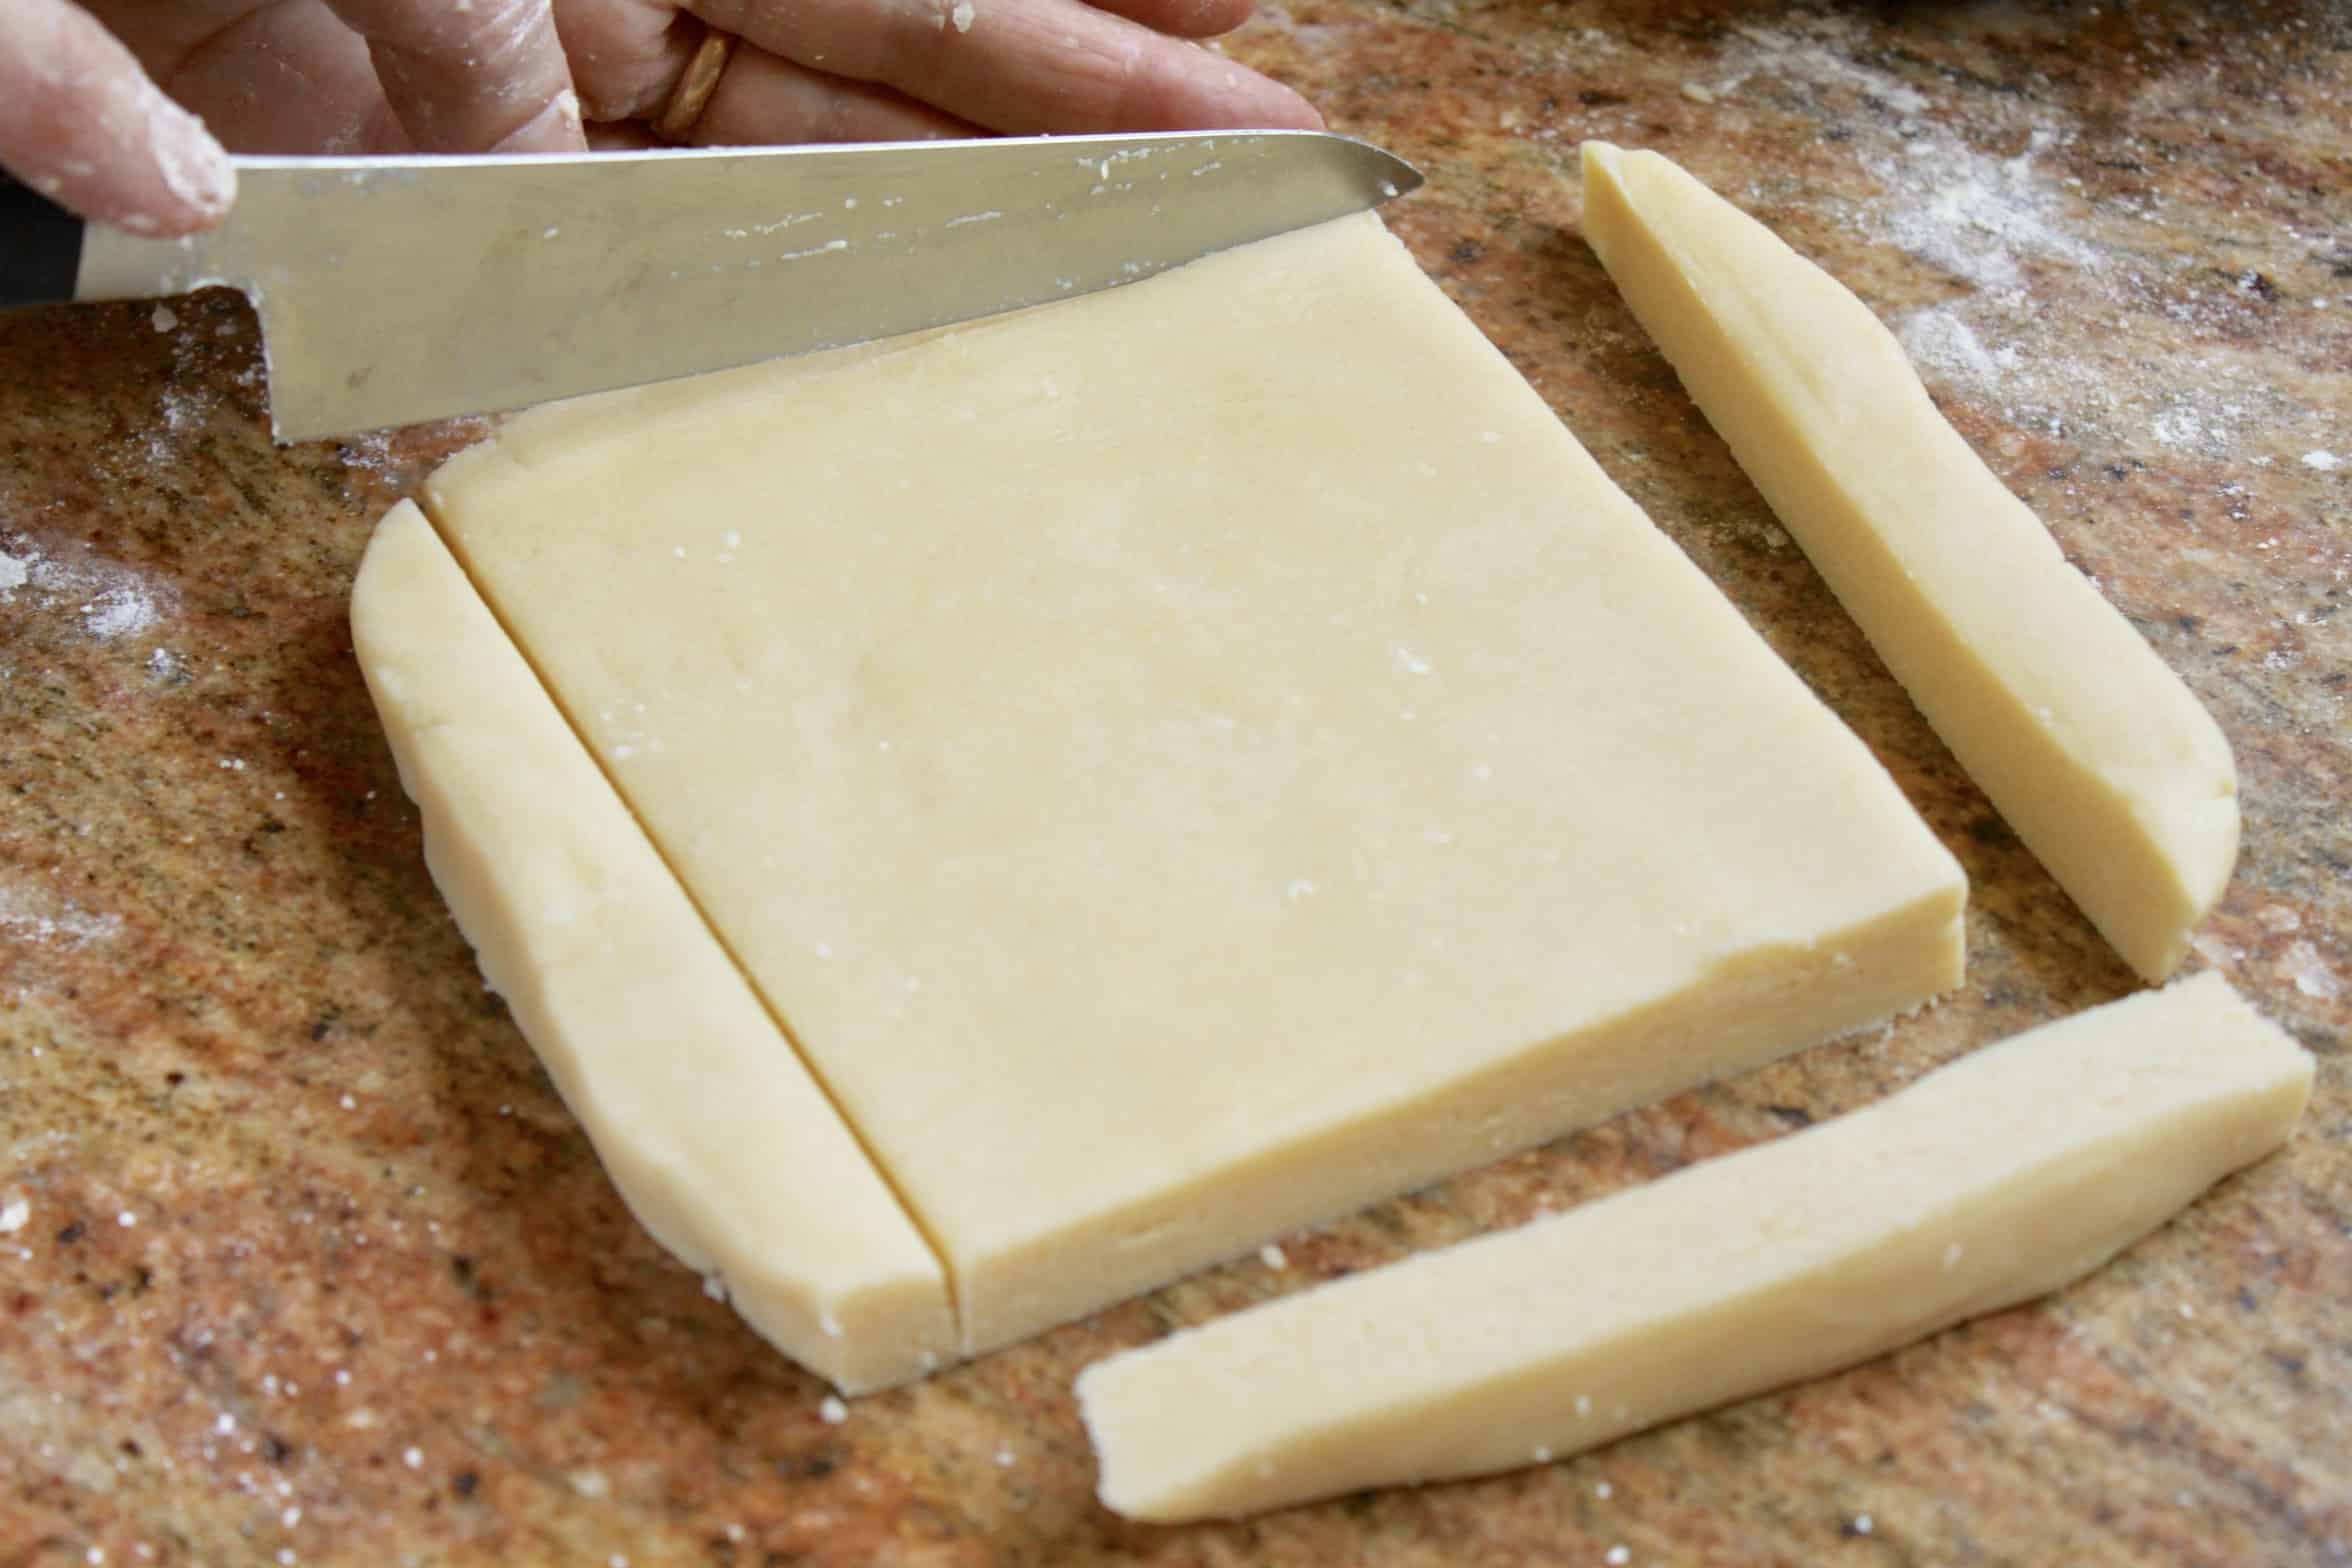 trimming shortbread dough